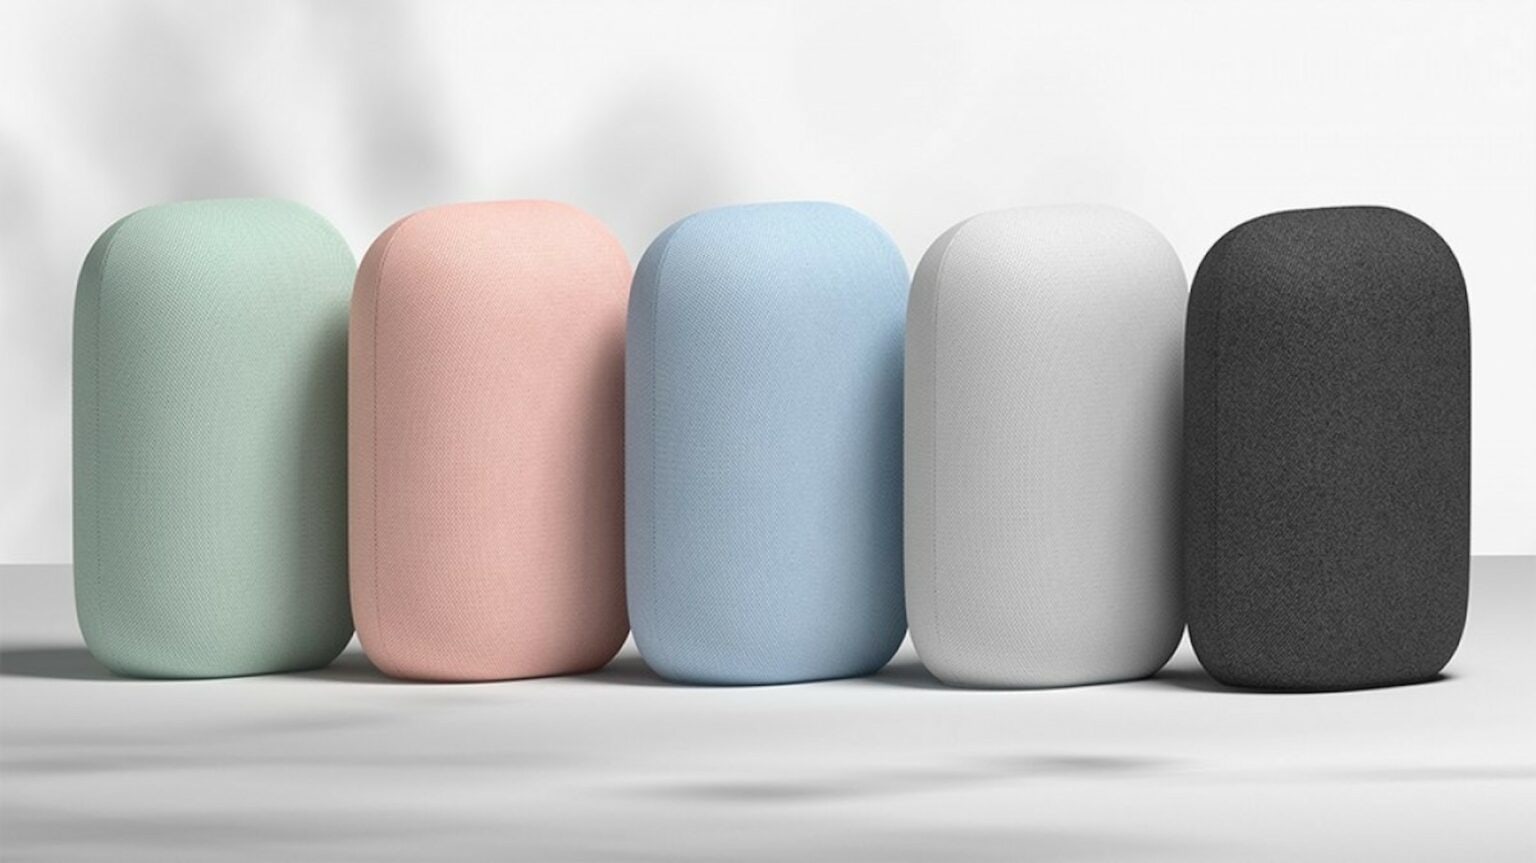 Google Nest smart speakers